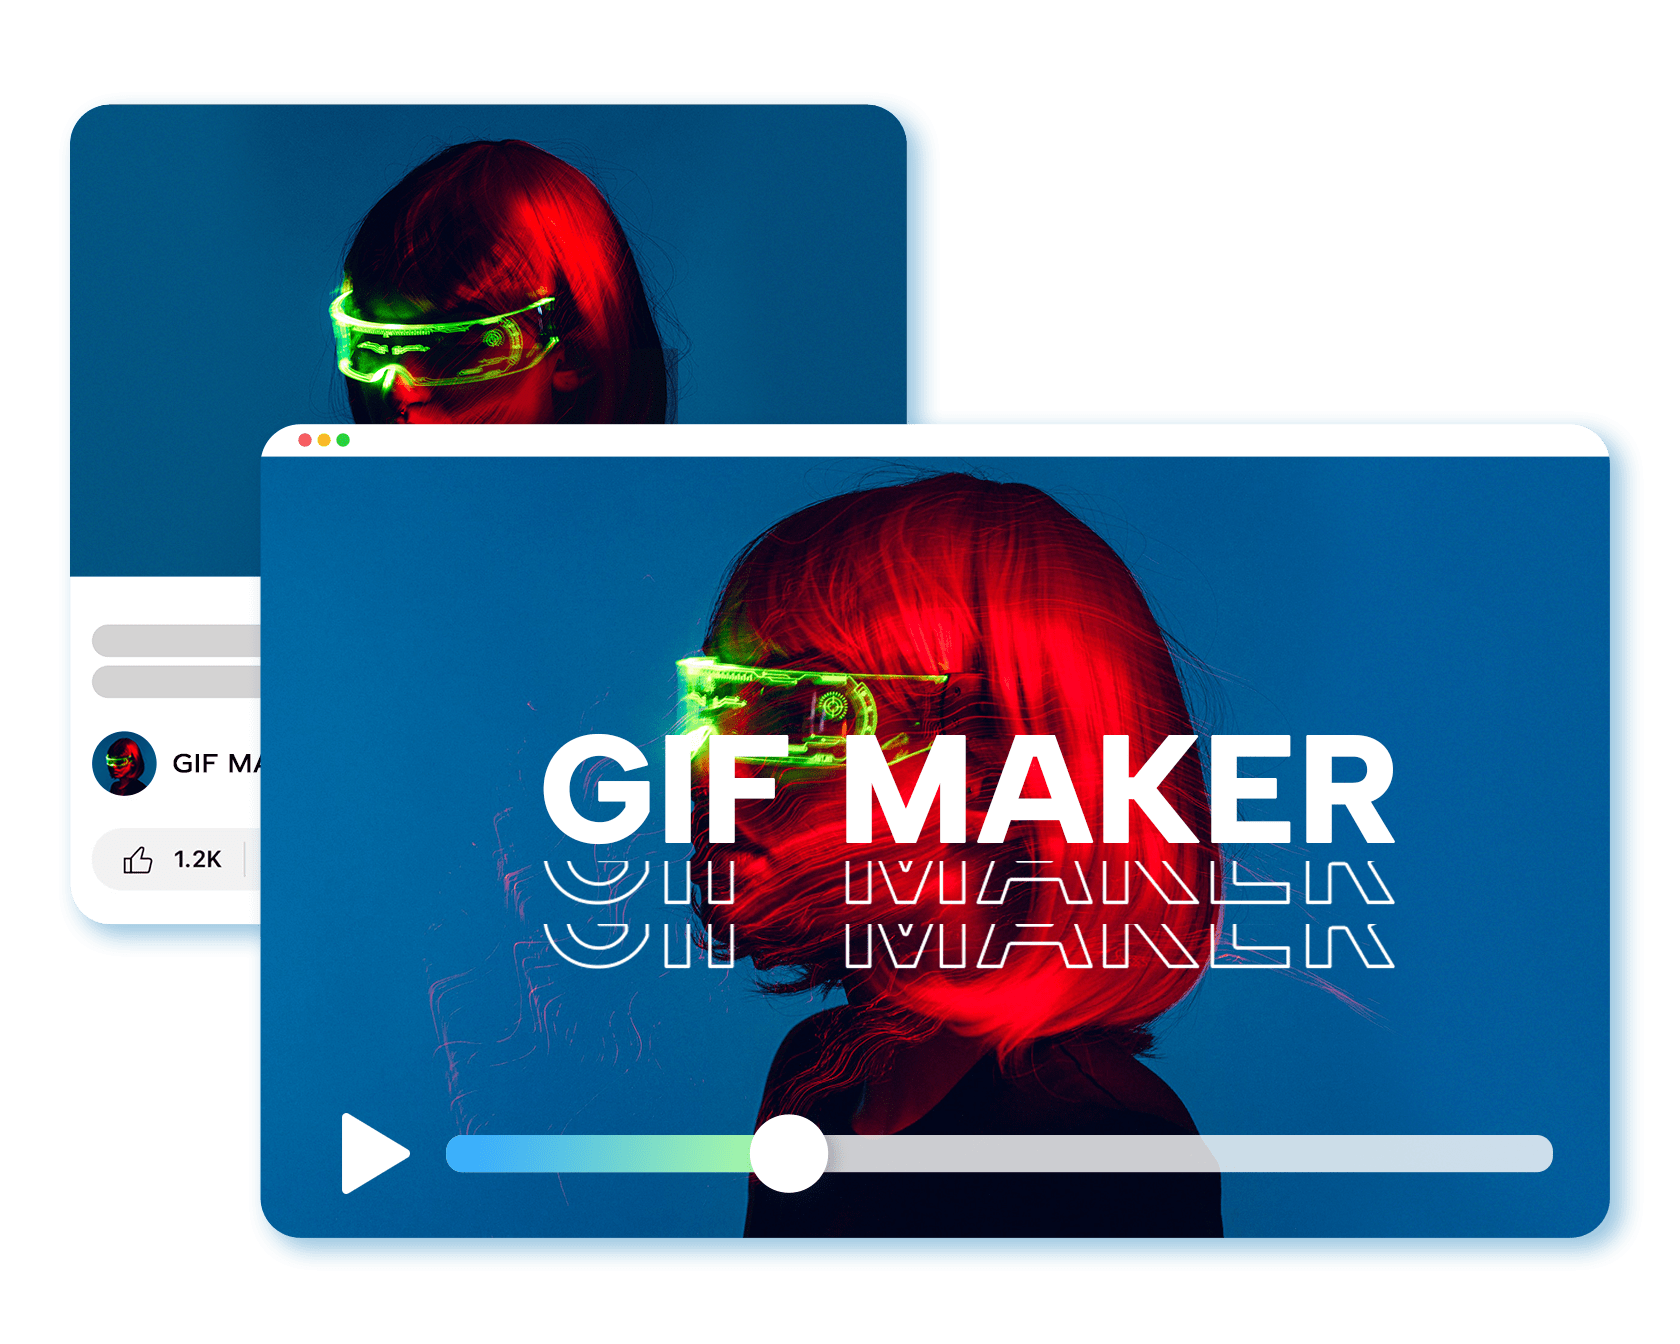 Cara Membuat Gif Di Iphone. Begini Cara Membuat GIF Buat Pemula yang Mudah & Menyenangkan!